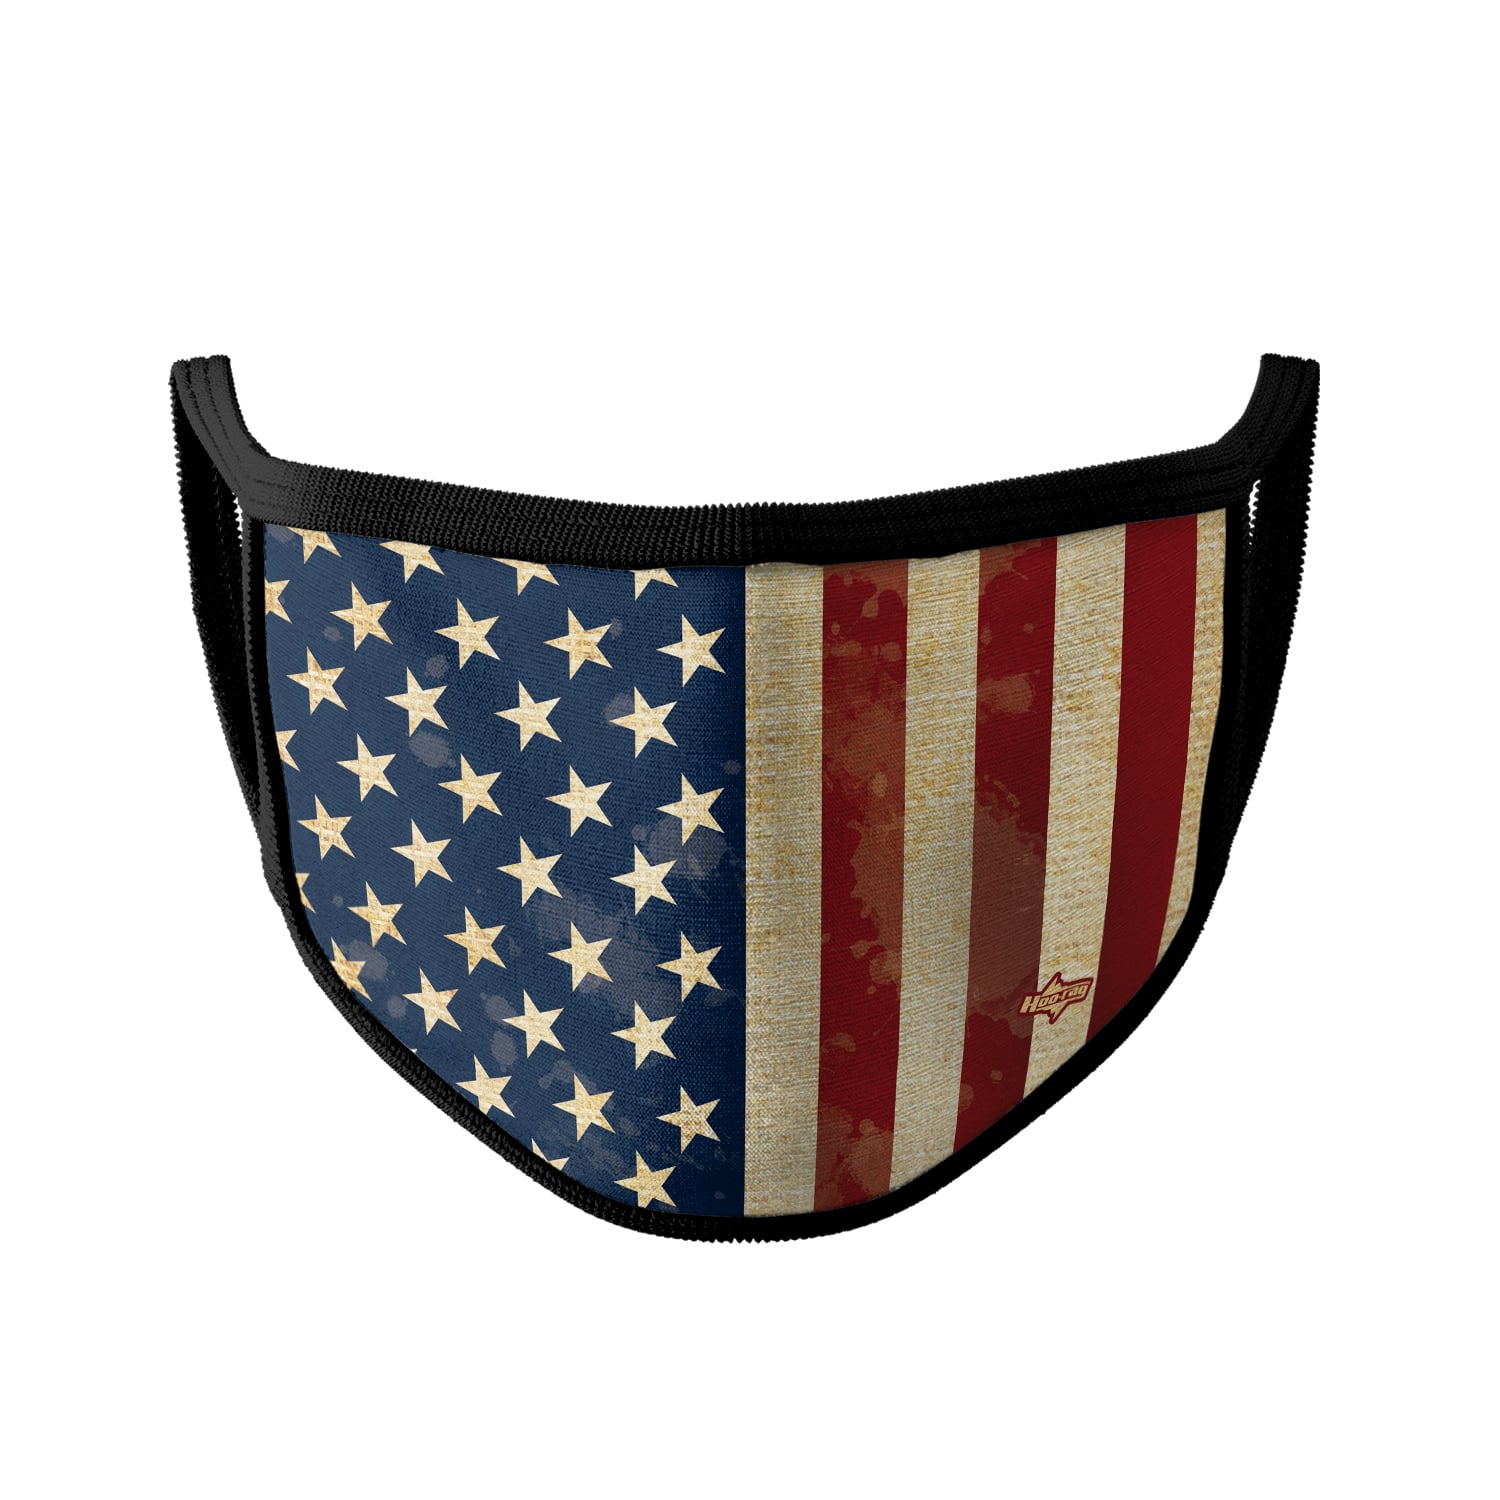 Fishing Shield Bandana Cloth Face Mask Facemask Cover Black USA American Flag 